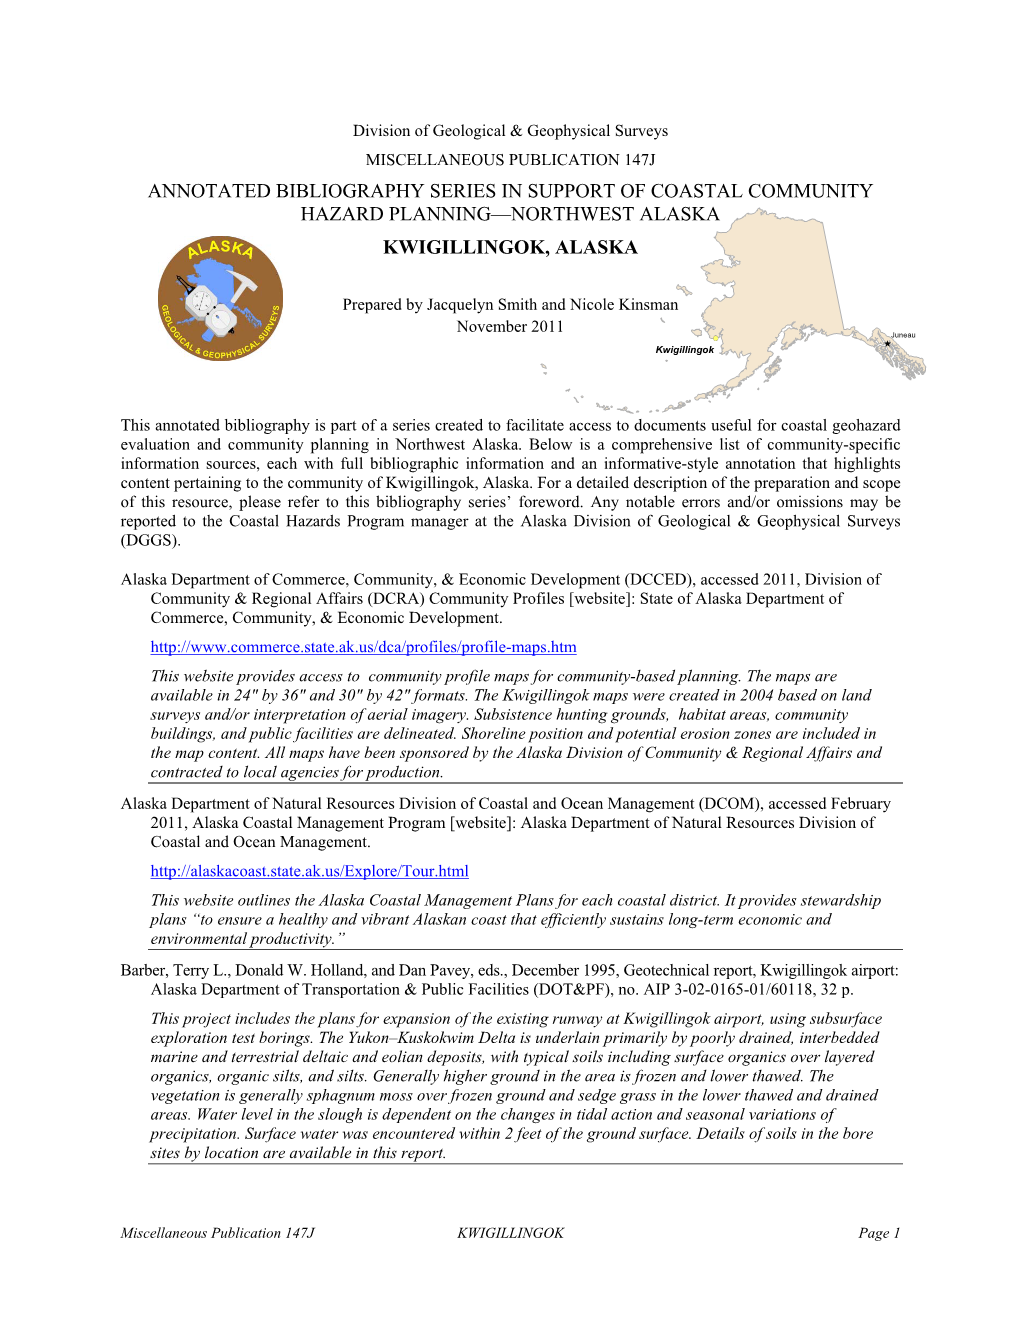 Annotated Bibliography Series in Support of Coastal Community Hazard Planning—Northwest Alaska Kwigillingok, Alaska